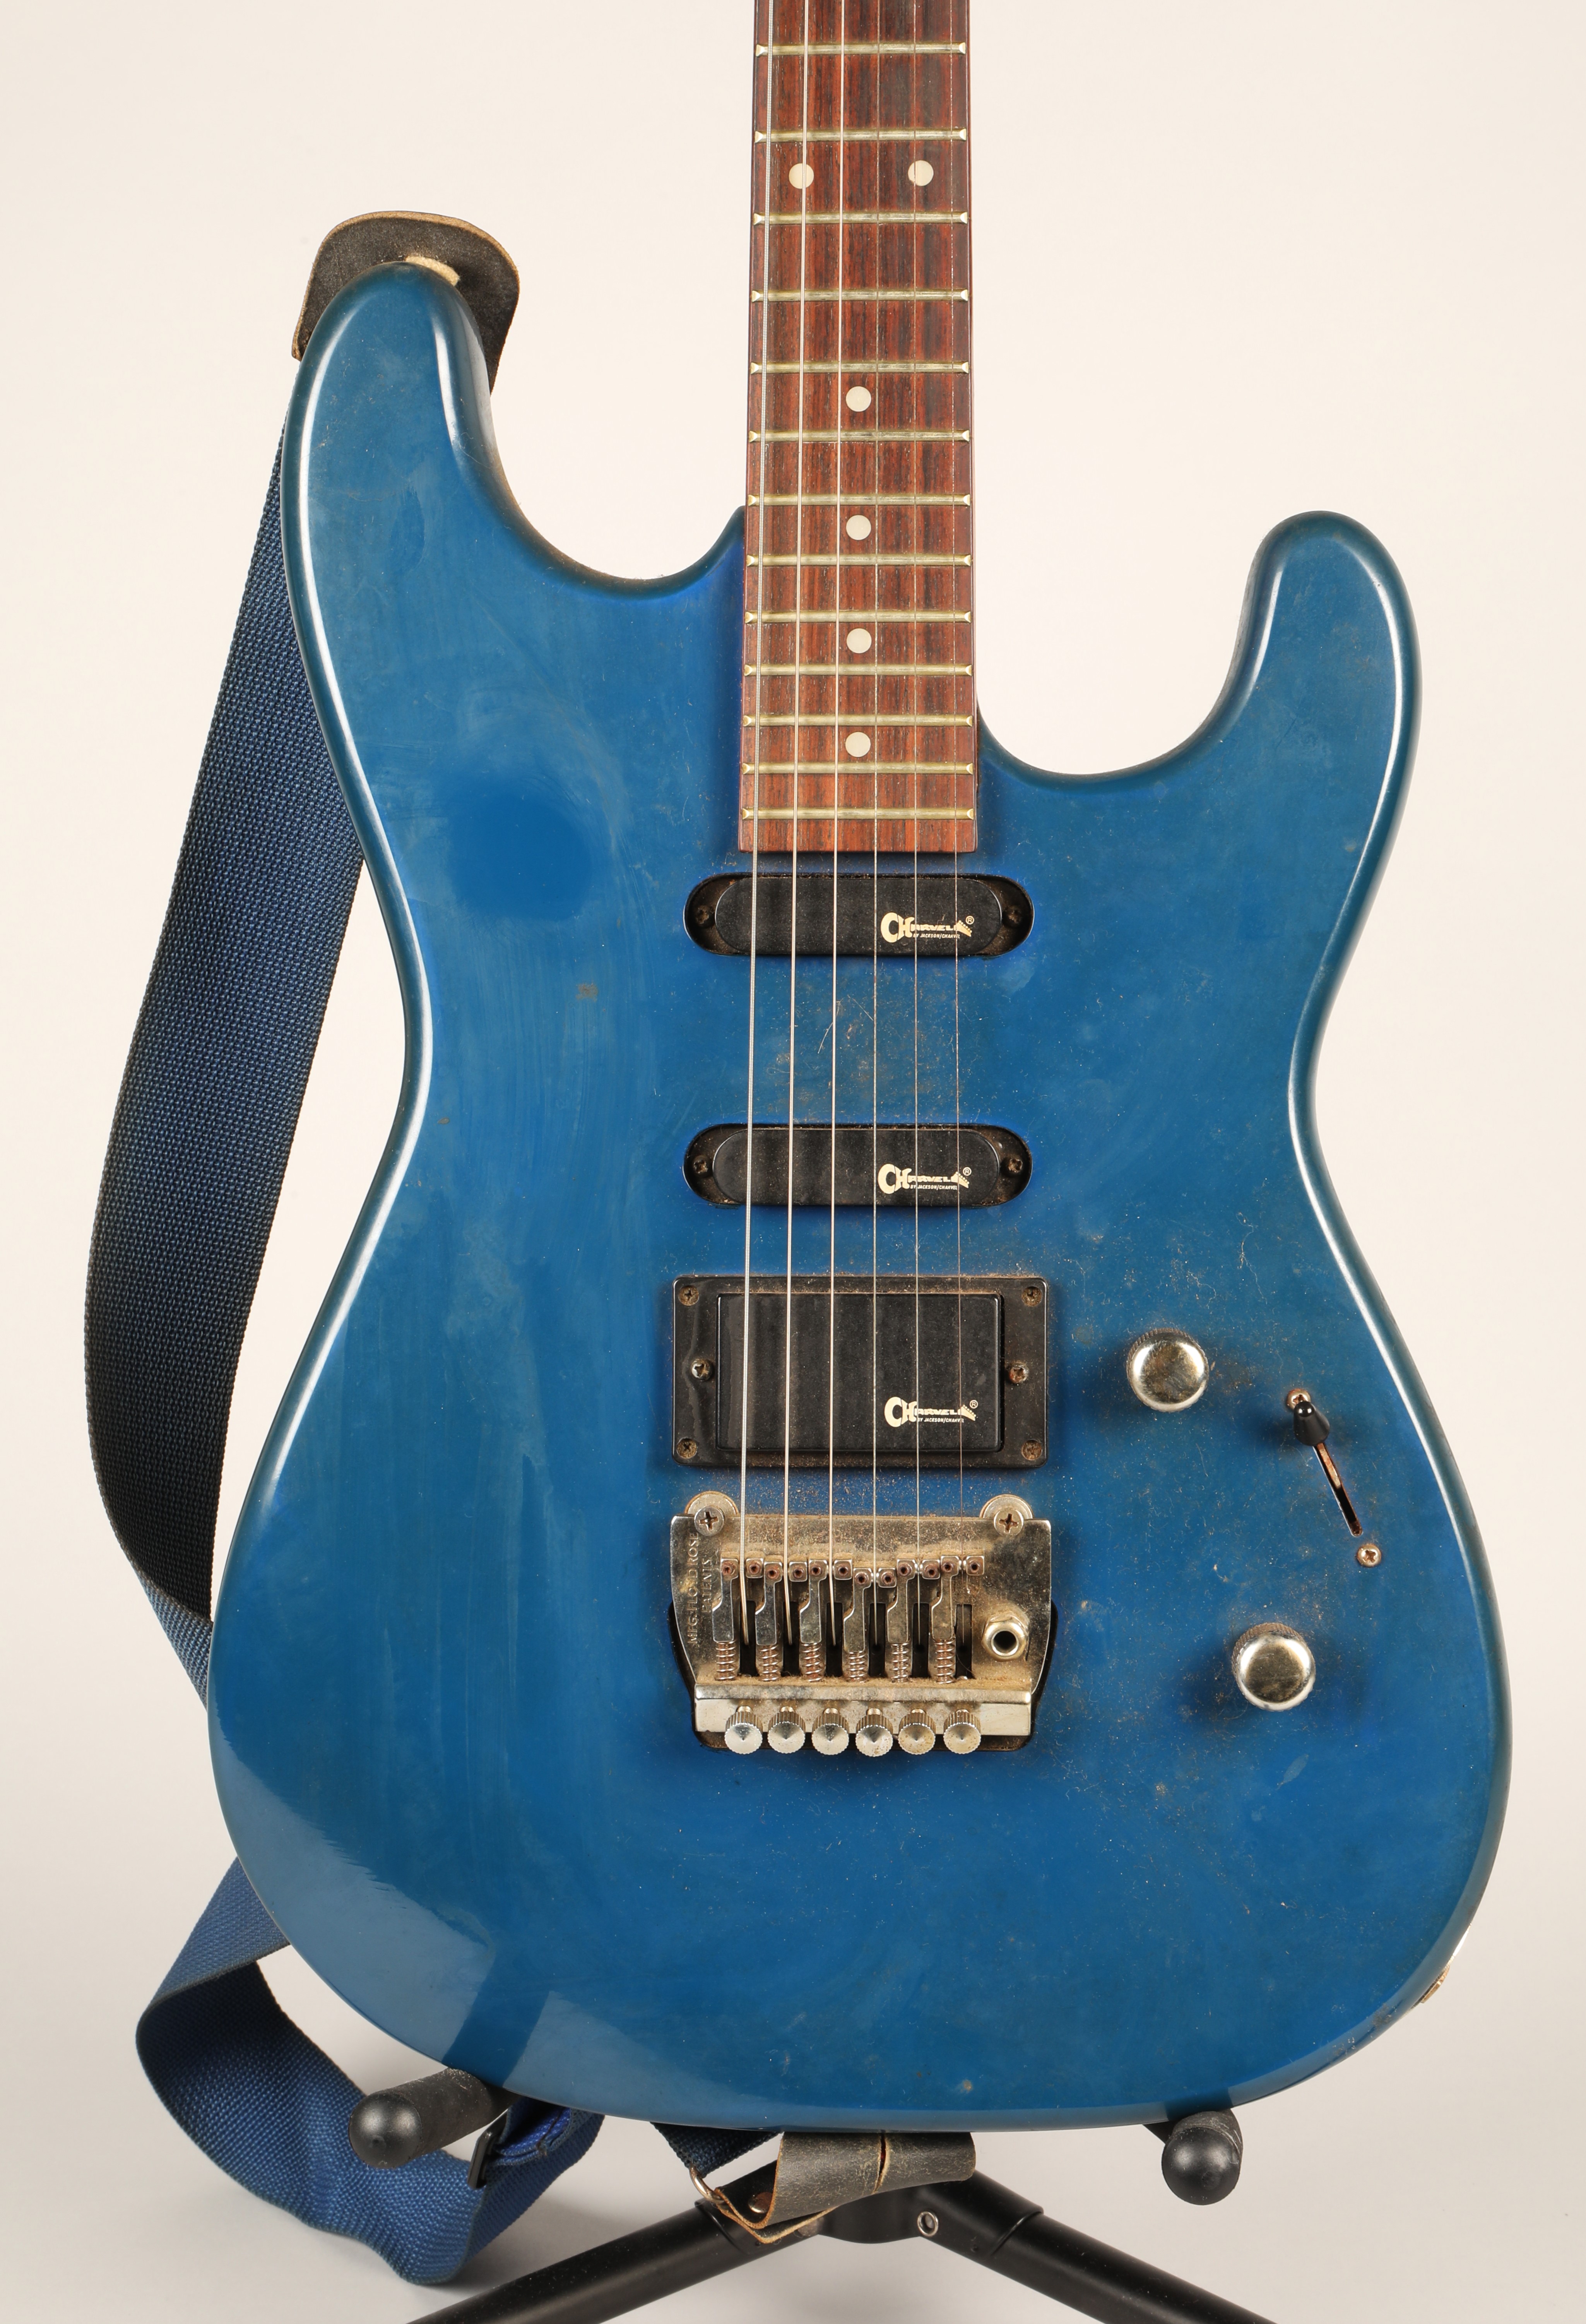 Charvette Charvel blue electric guitar, - Image 2 of 5